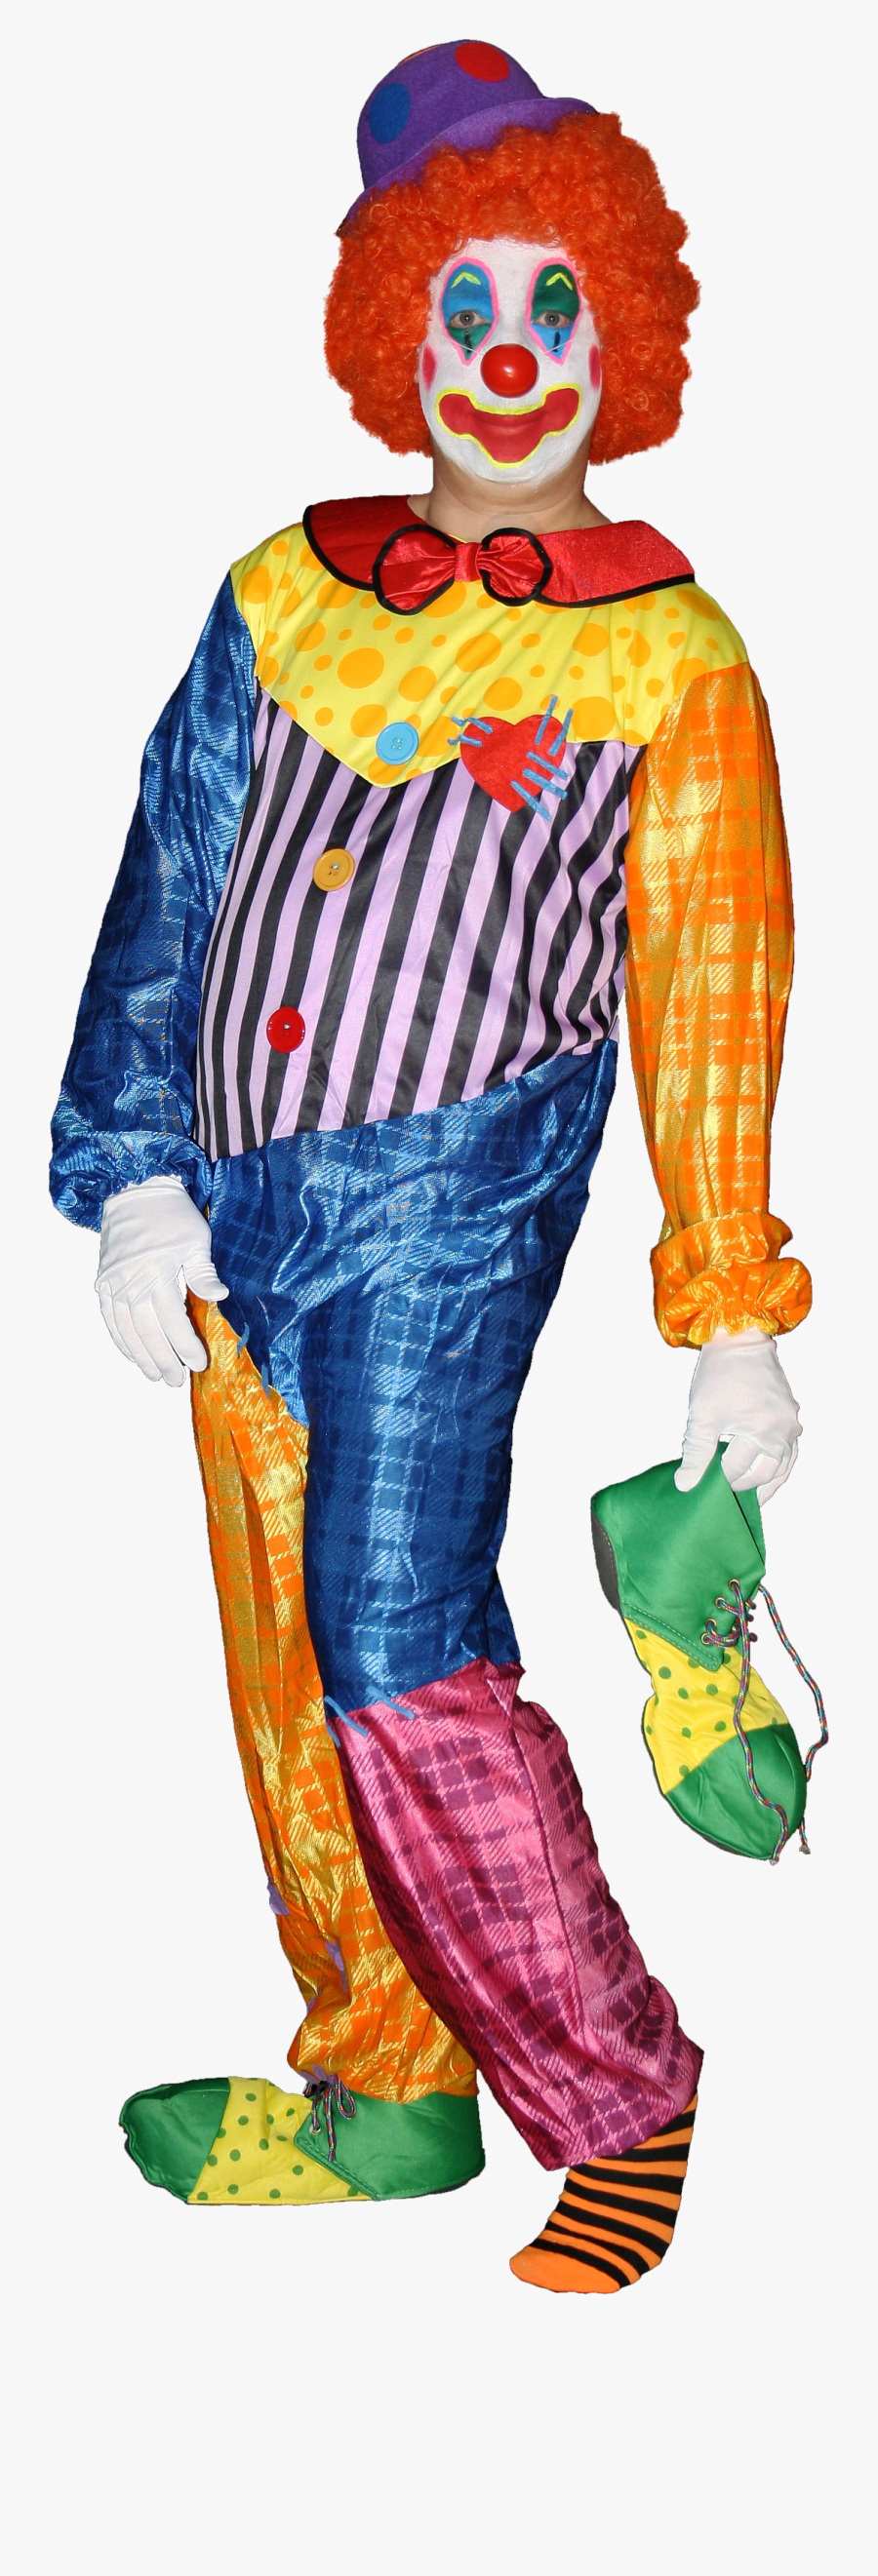 Clown - Clown Png, Transparent Clipart